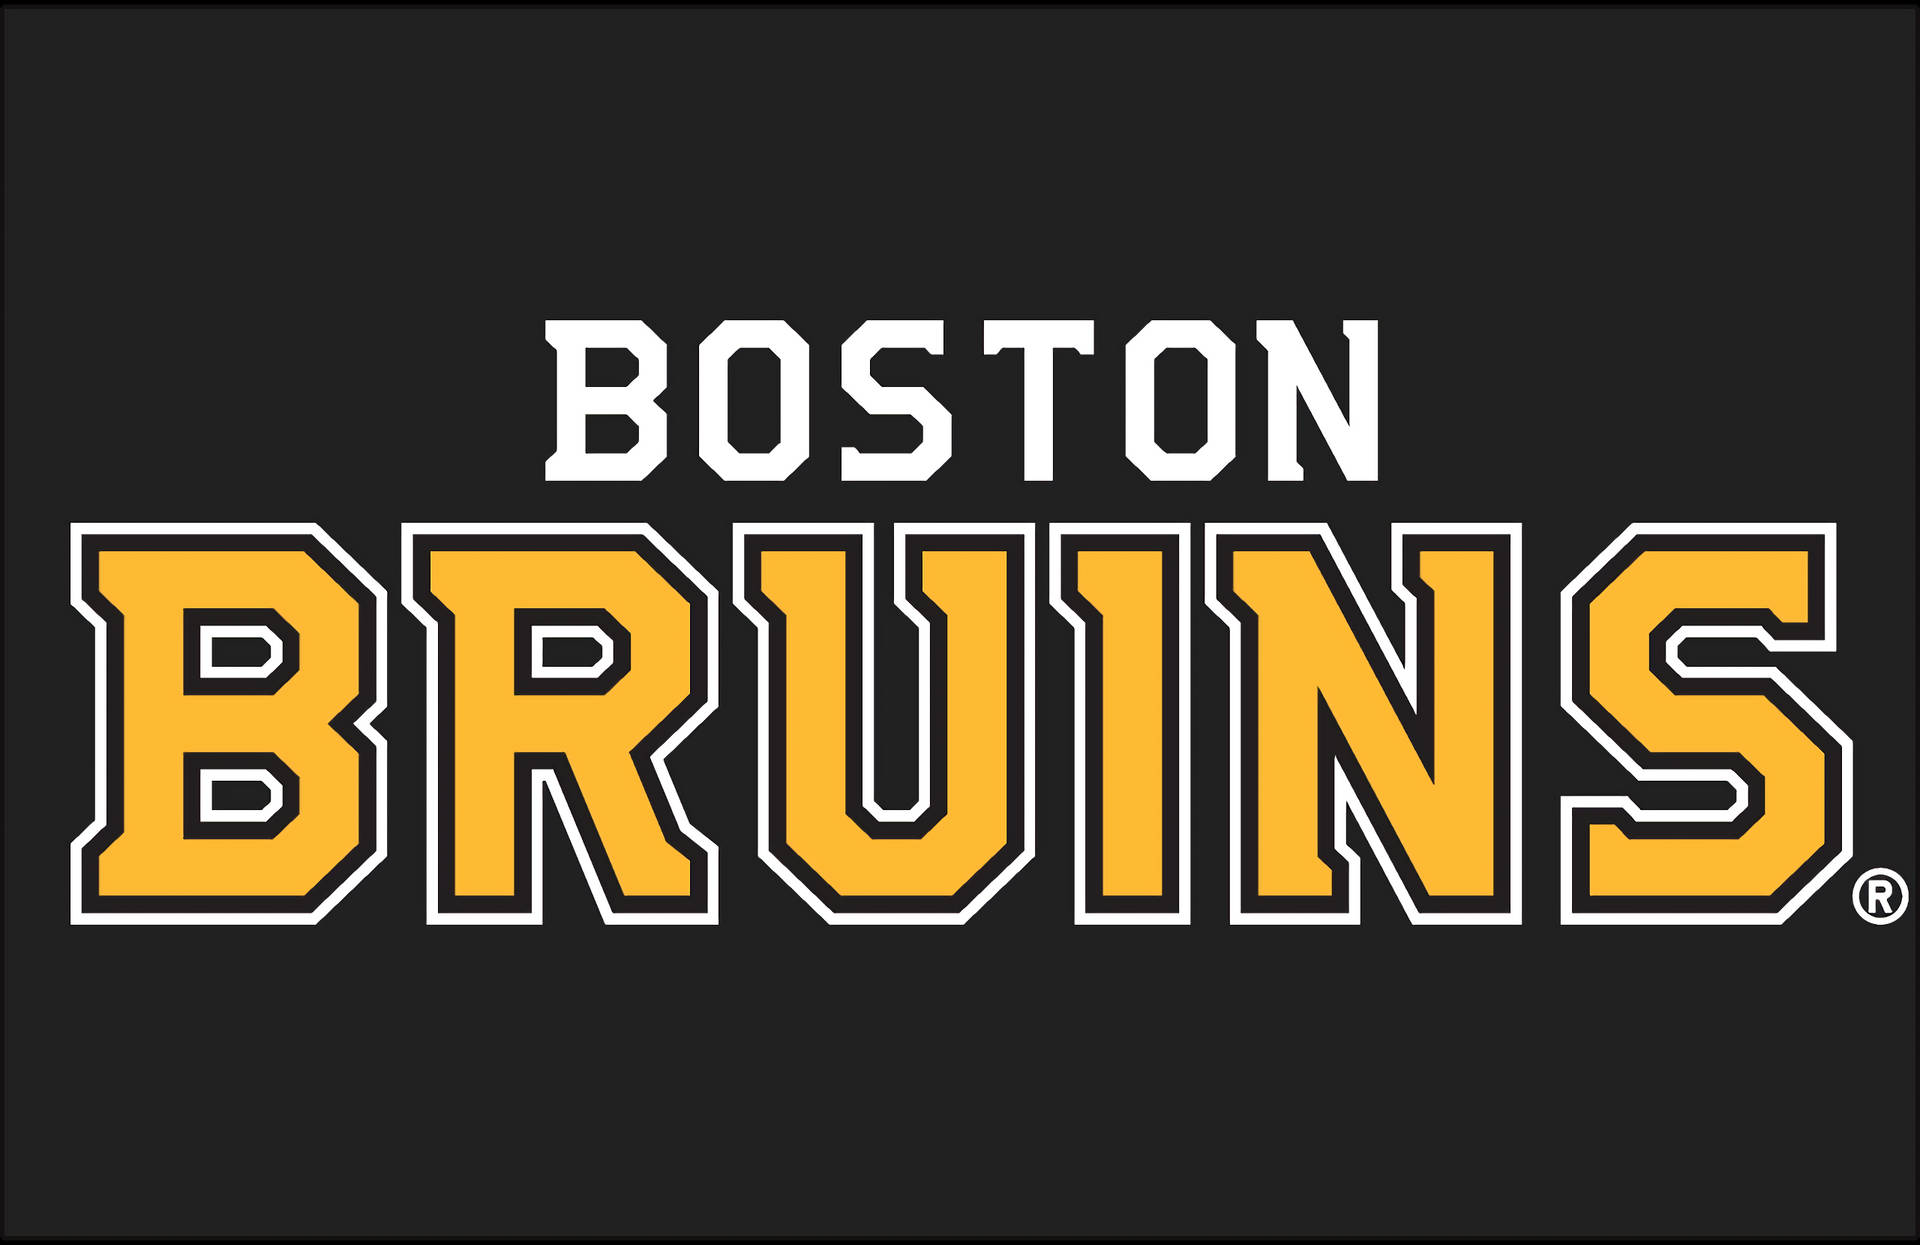 Boston Bruins Text